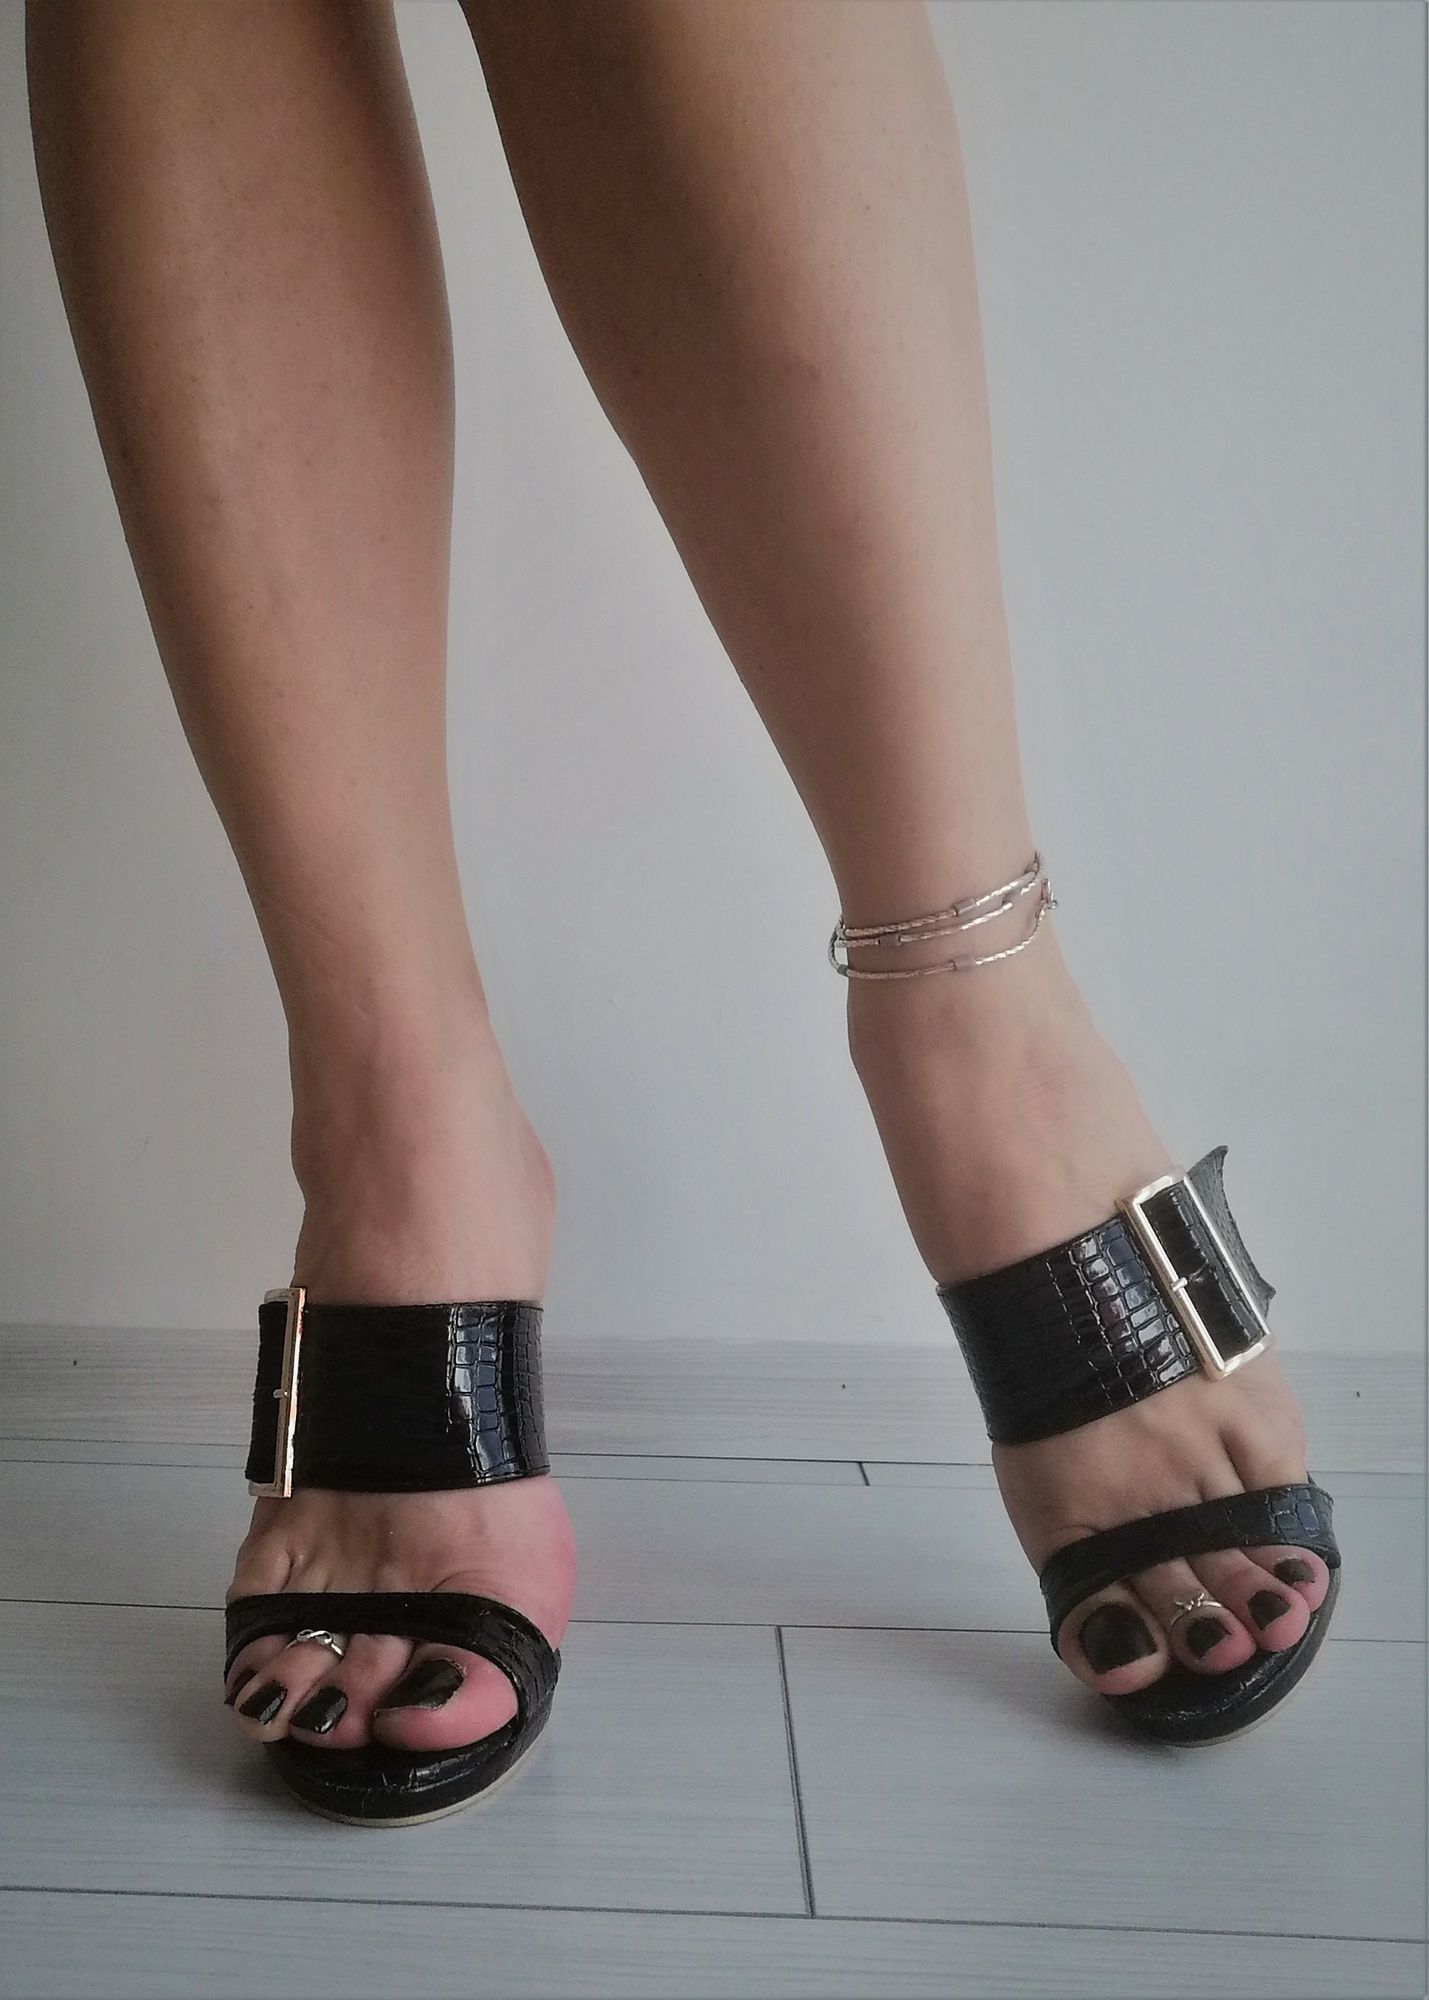 Black Sandal Heels & Sexy Feet #35